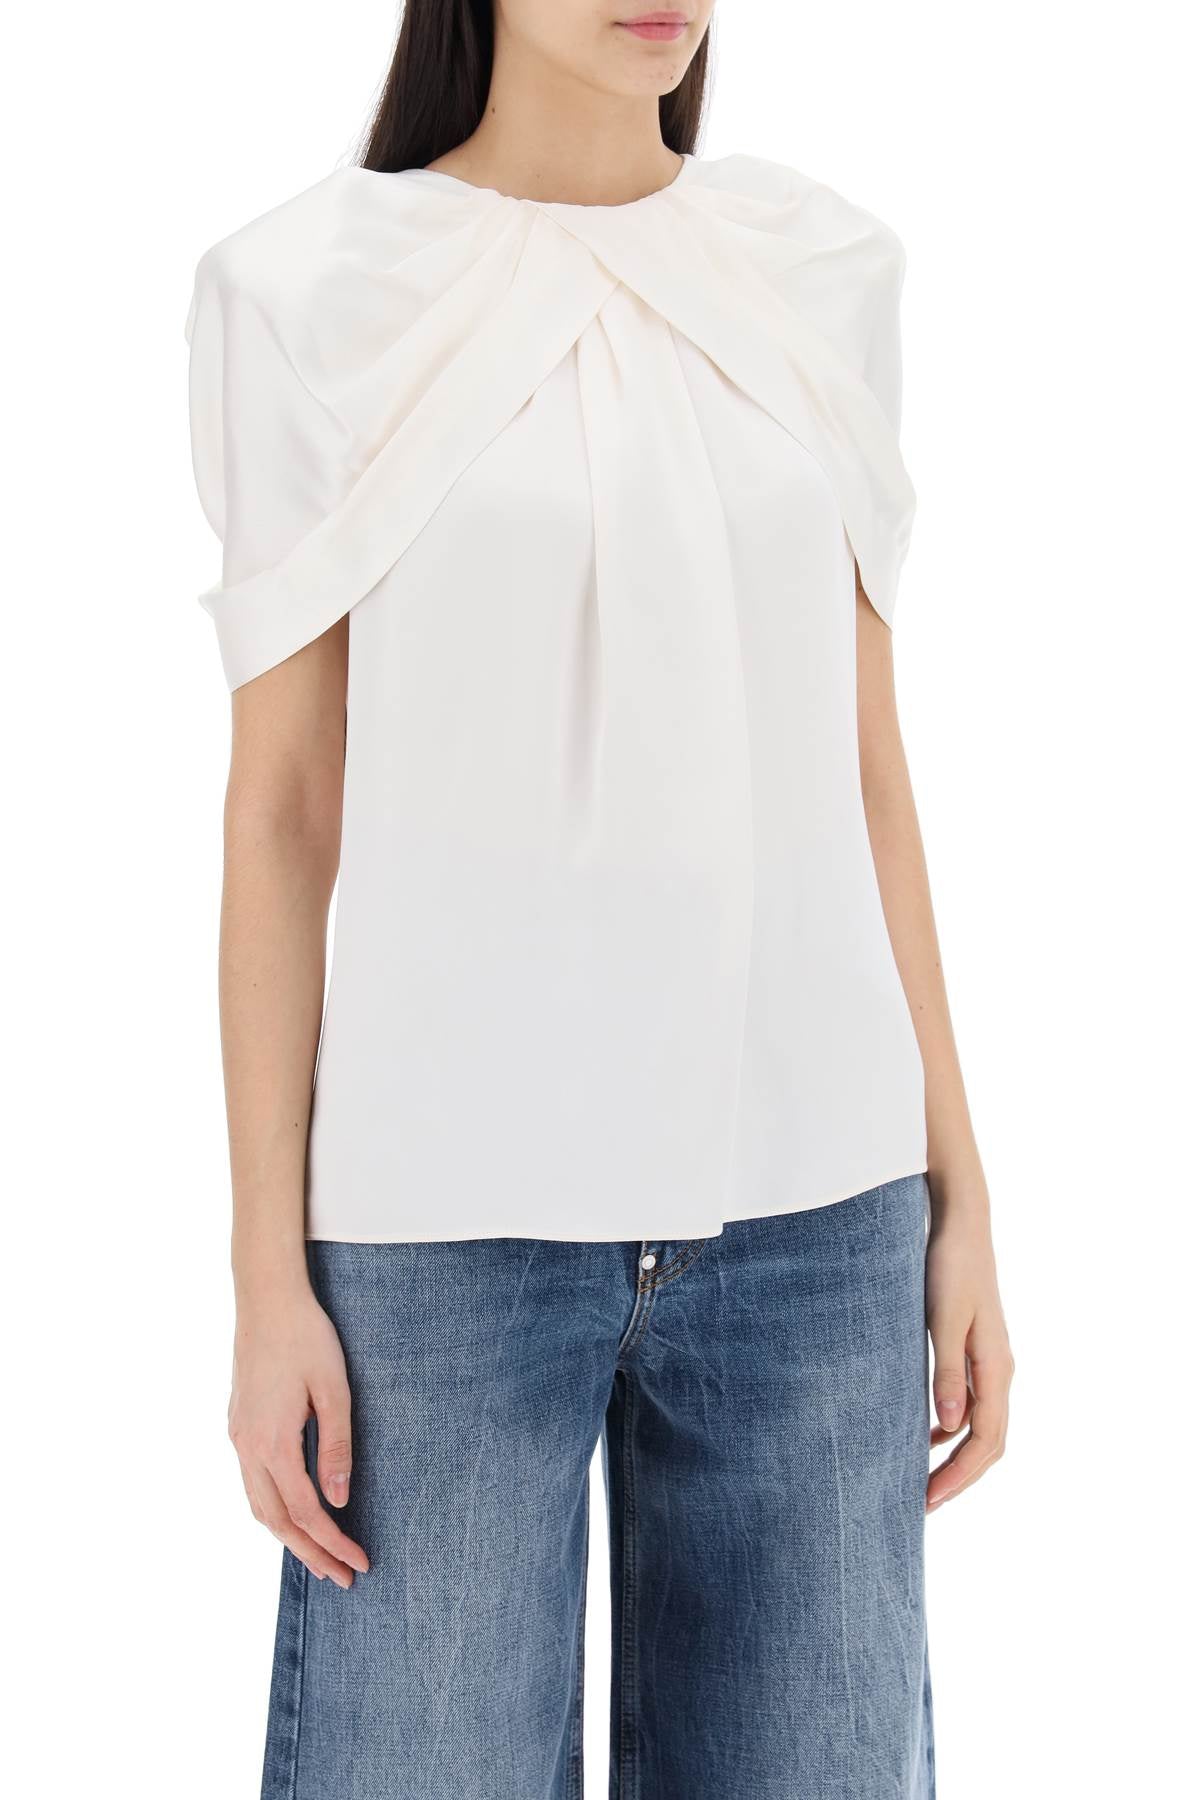 Stella mccartney satin blouse with petal sleeves-women > clothing > shirts and blouses > blouses-Stella McCartney-Urbanheer